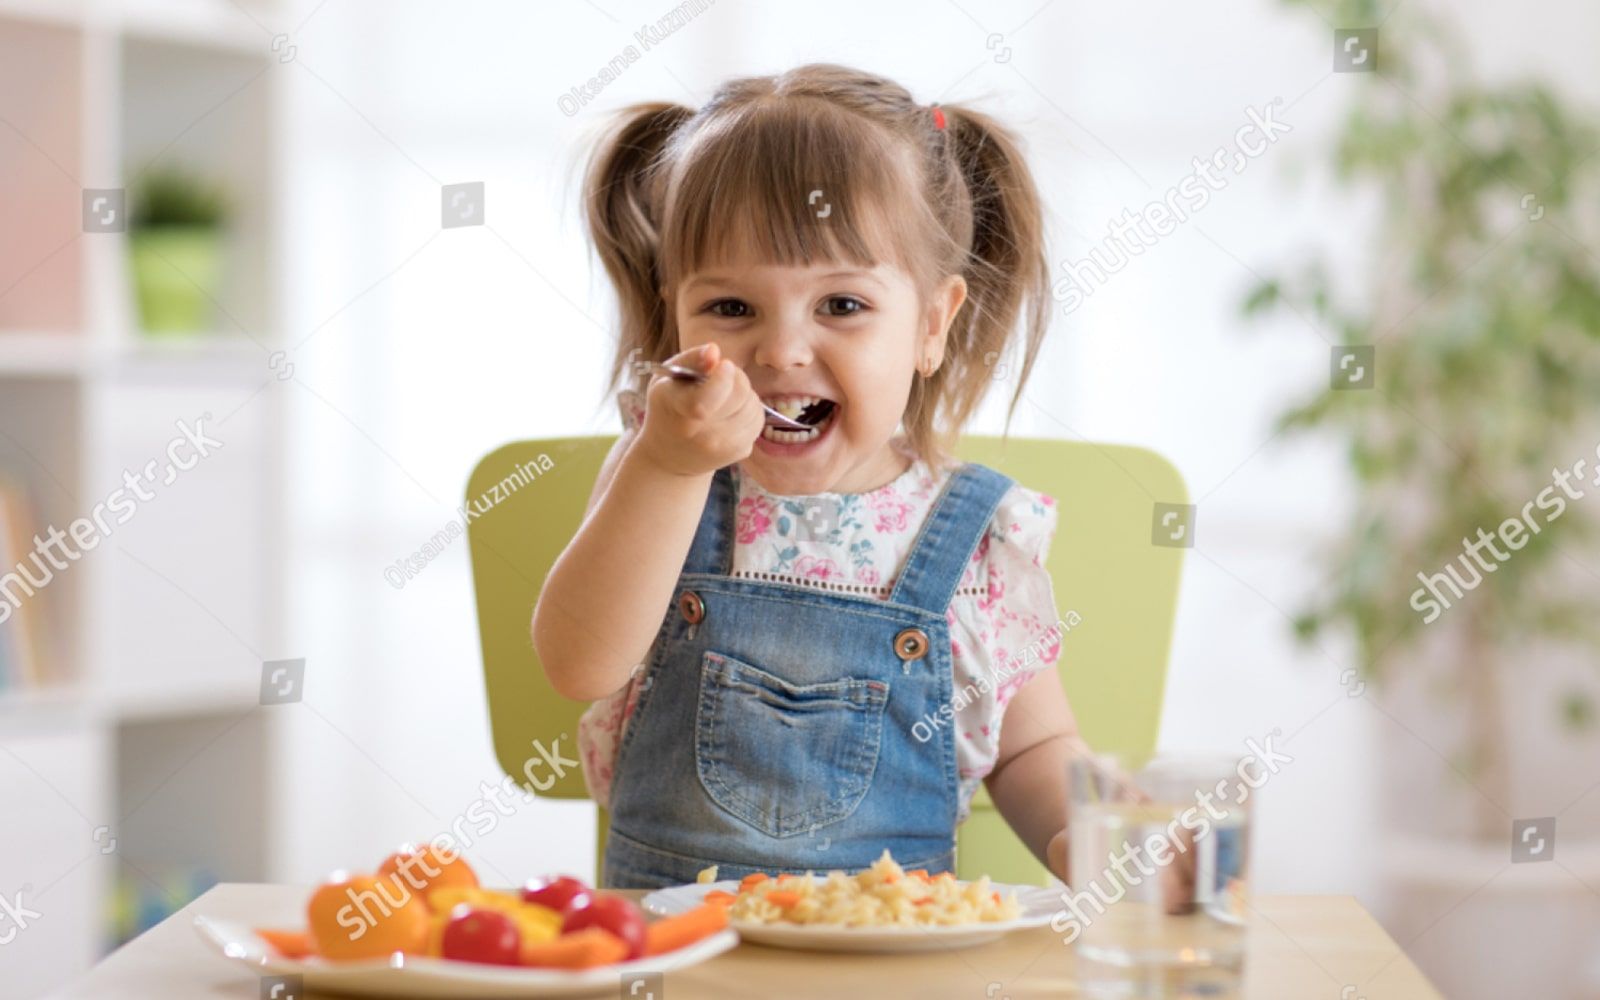 Child enjoying healthy foods